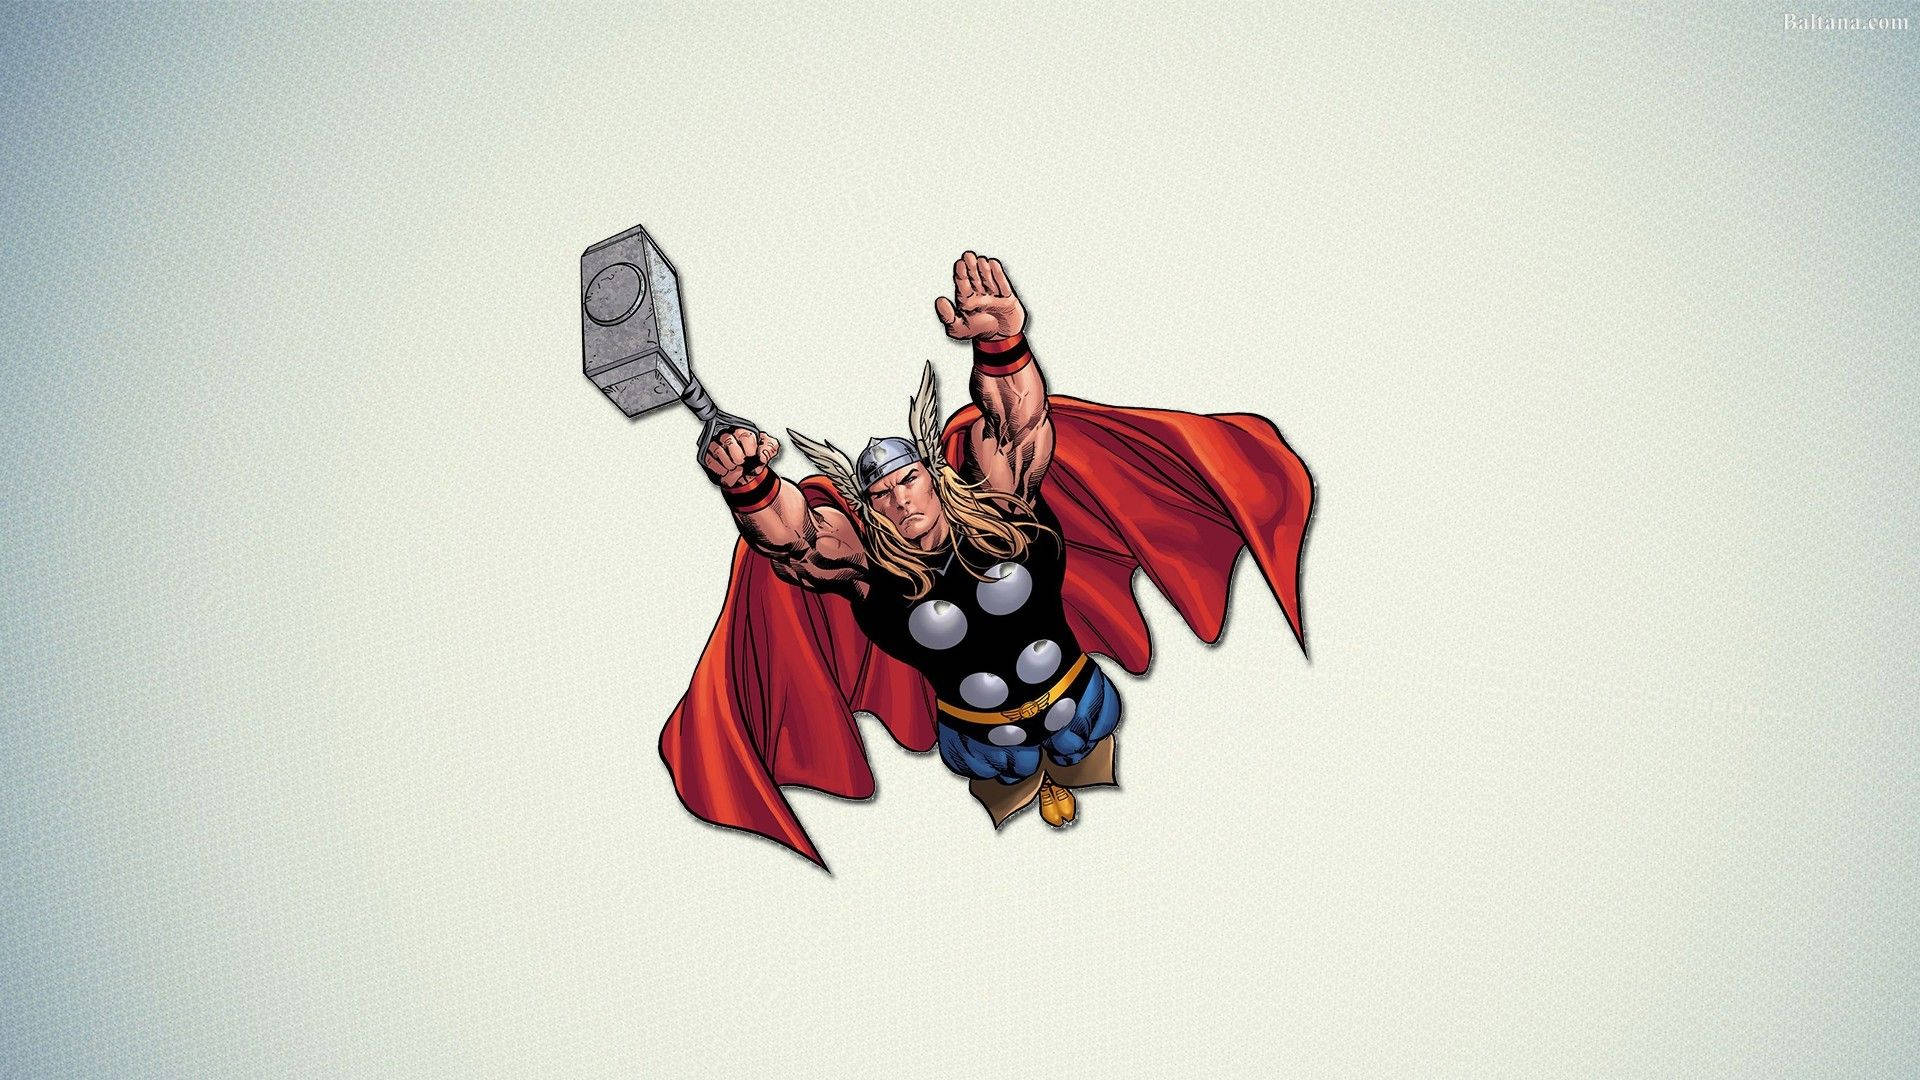 Thor soars through the heavens Wallpaper